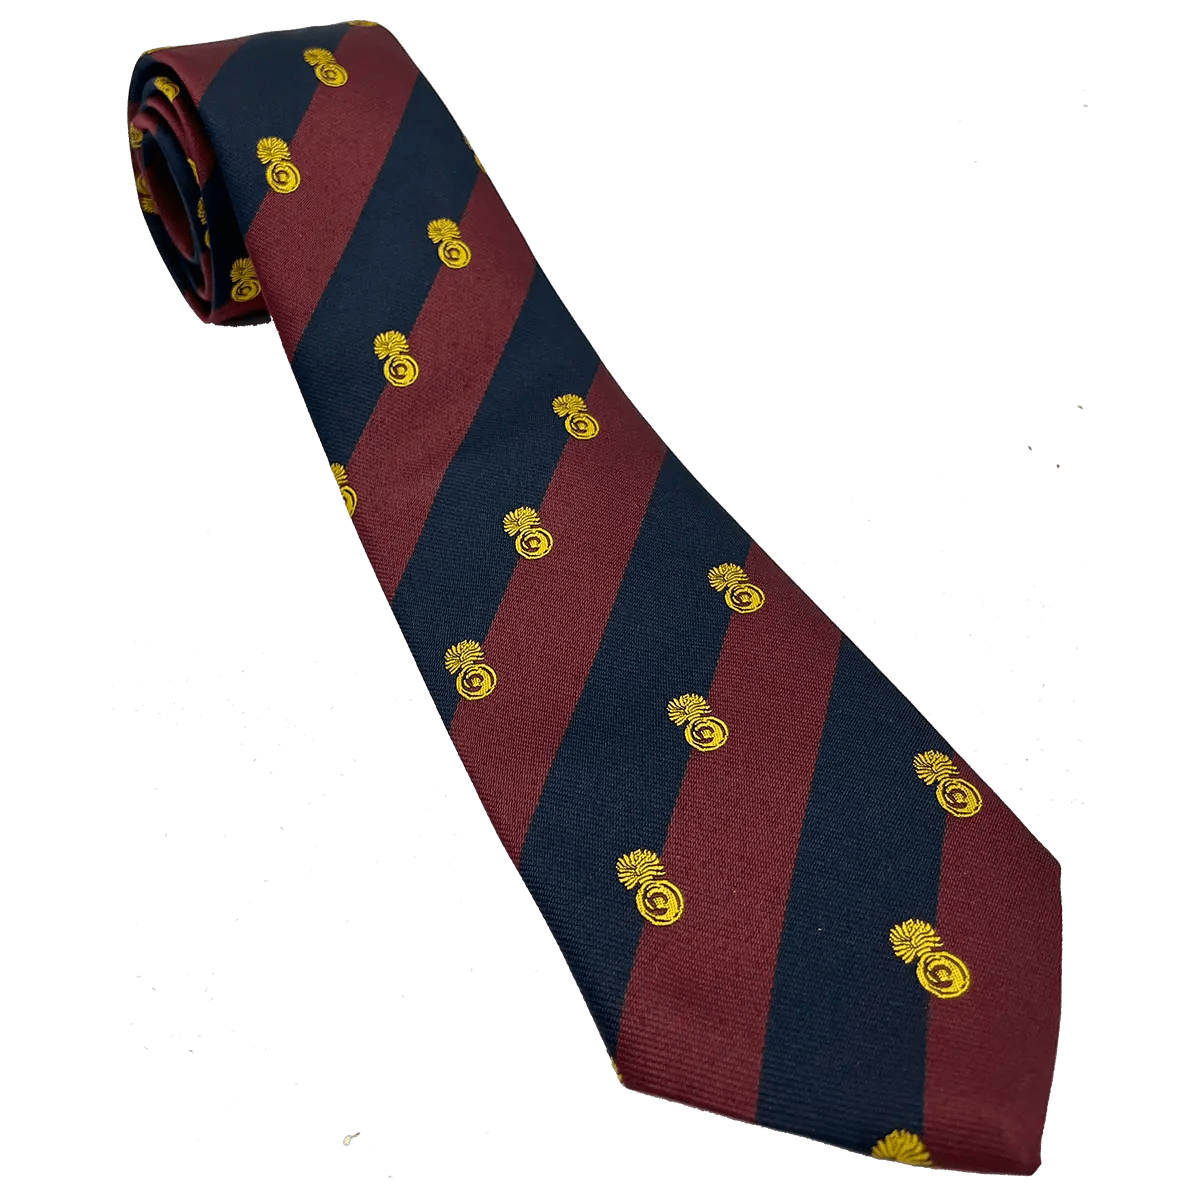 Grenadier Guards Crest Regimental Polyester Tie - John Bull Clothing